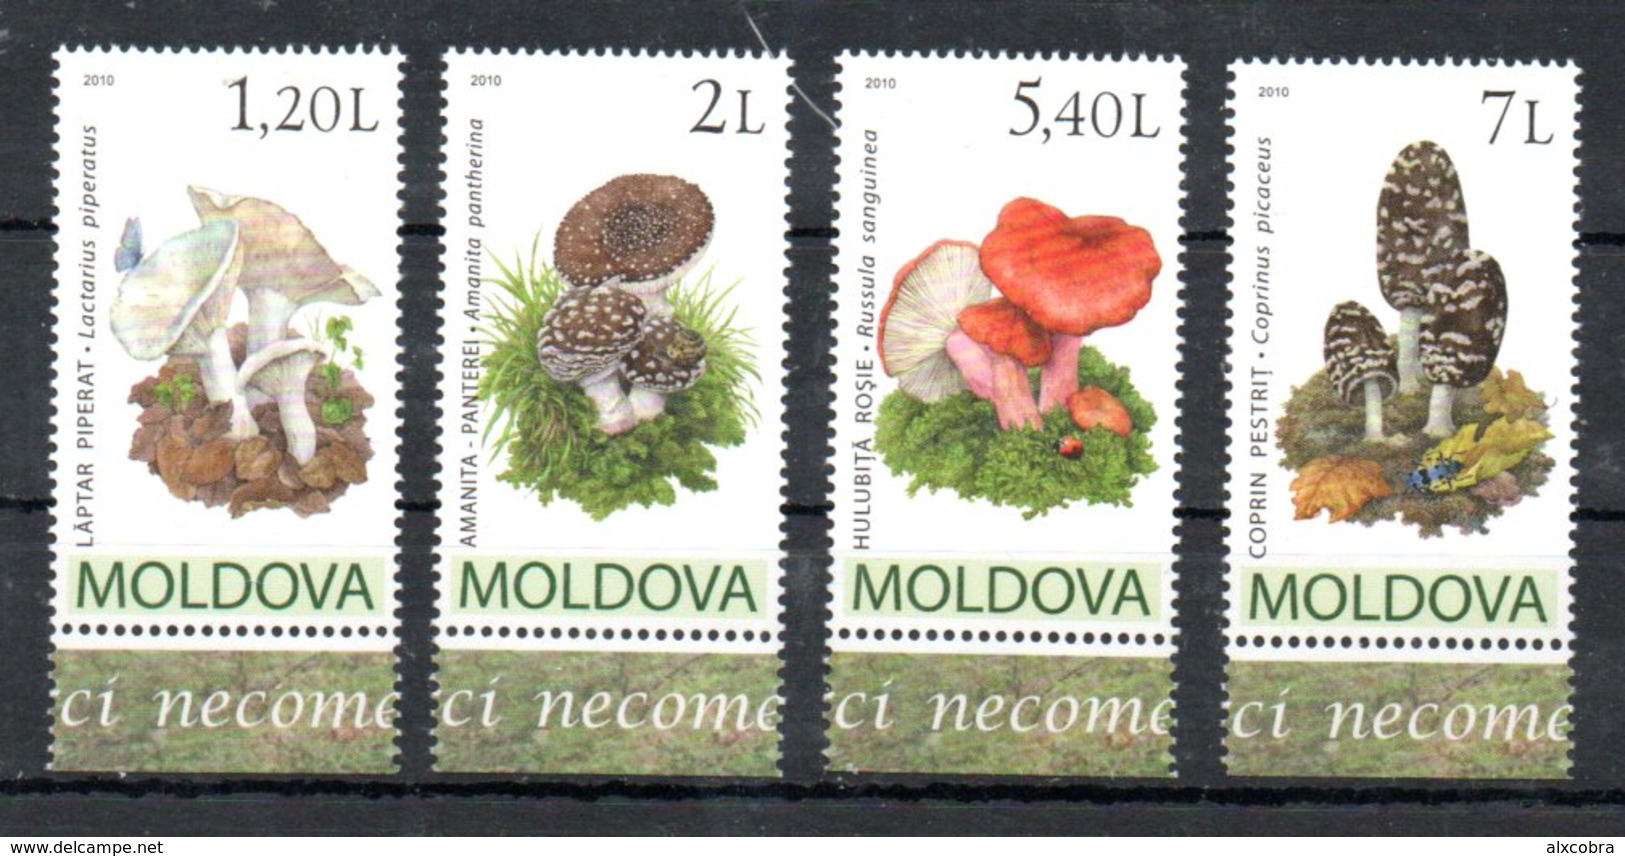 Moldavia Moldova Mushrooms Fungi 2010 MNH - Moldova